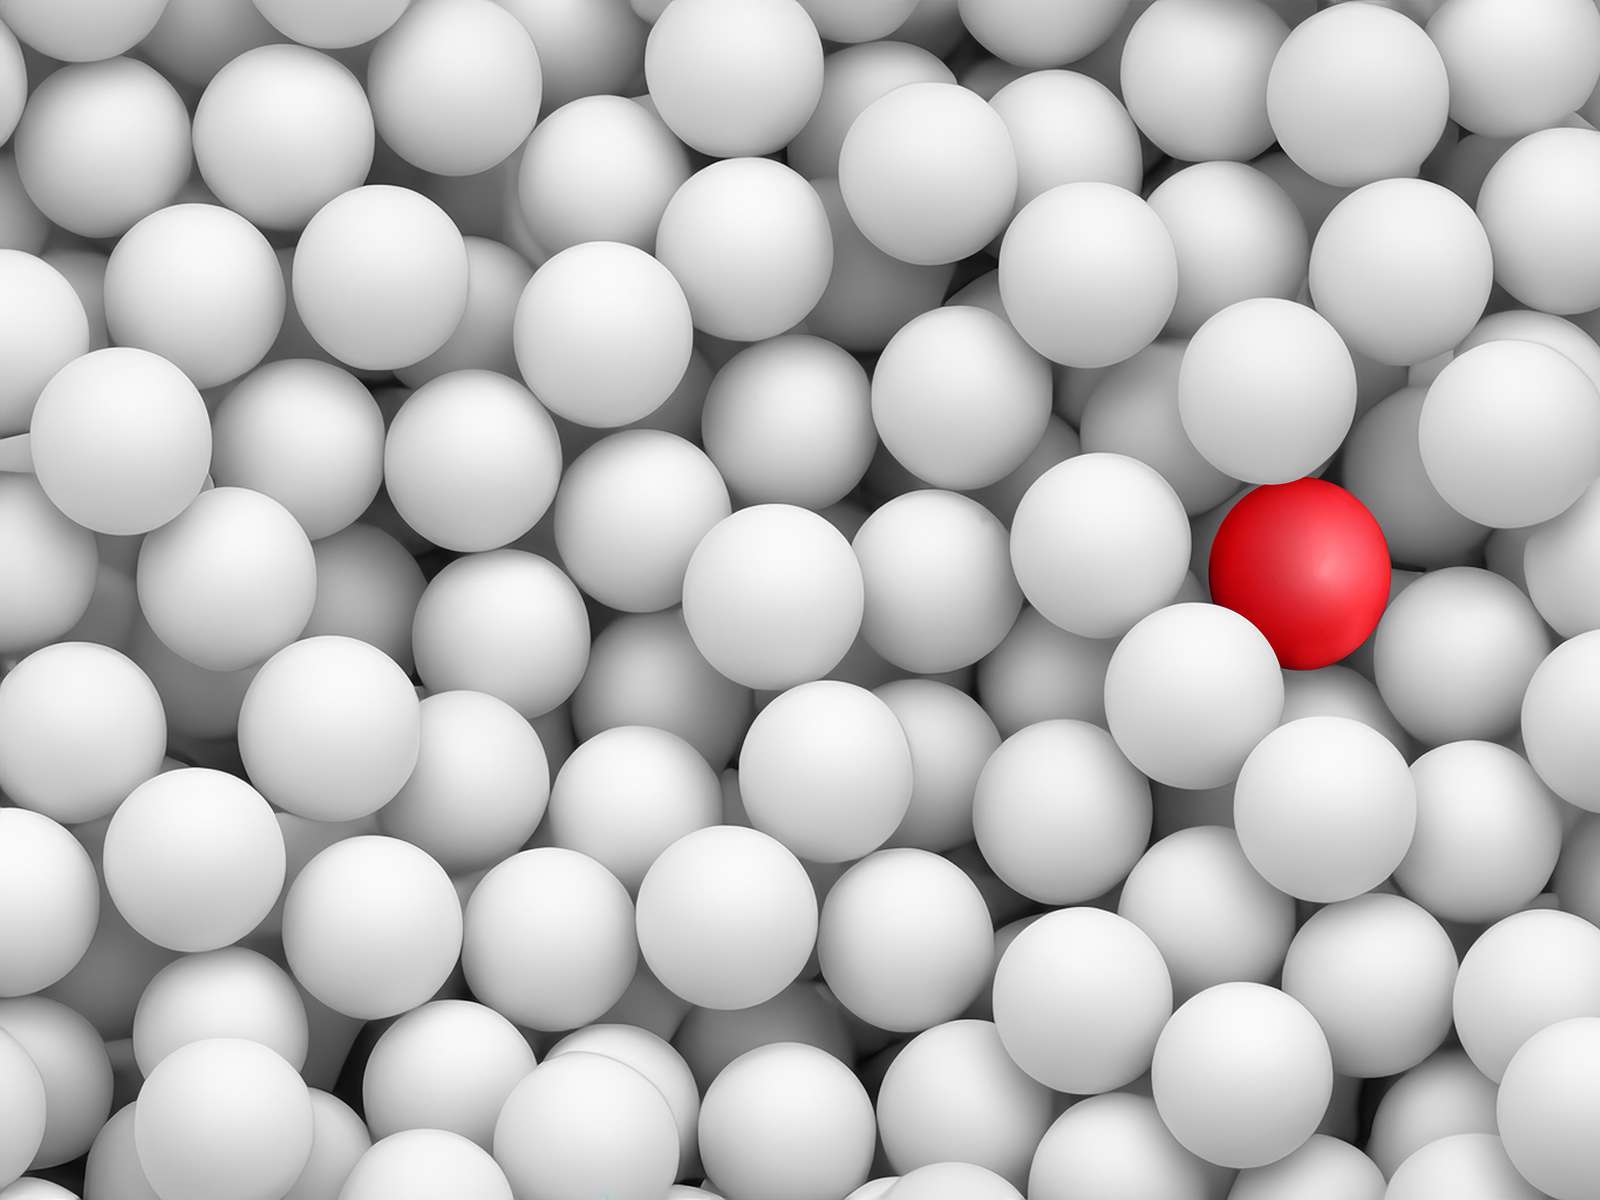 A single red ball among many white balls.